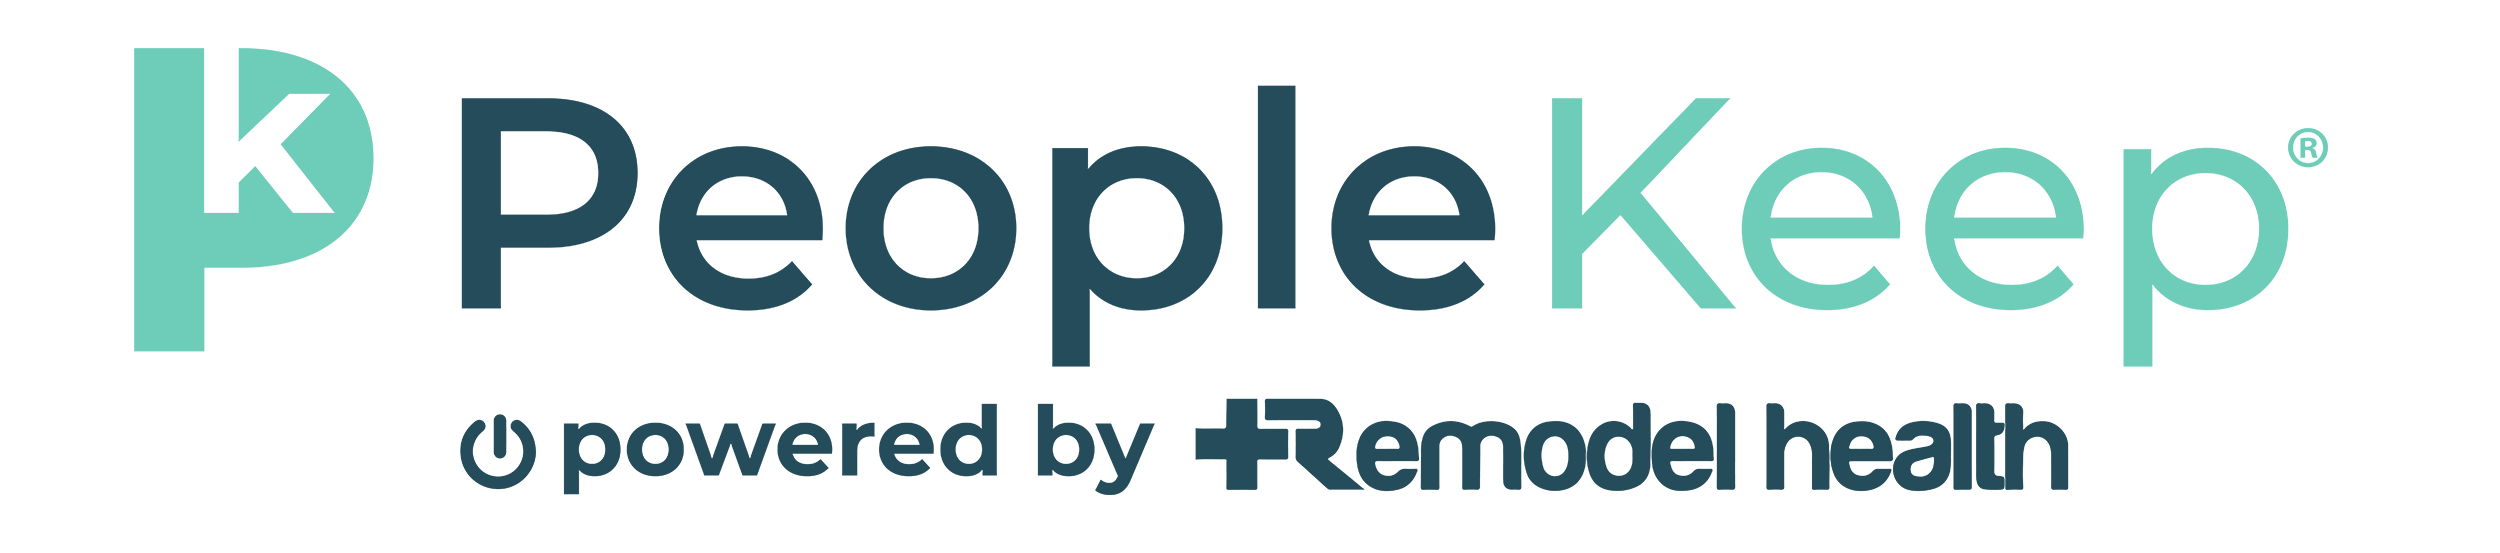 PeopleKeep Logo Horizontal RH Small Size